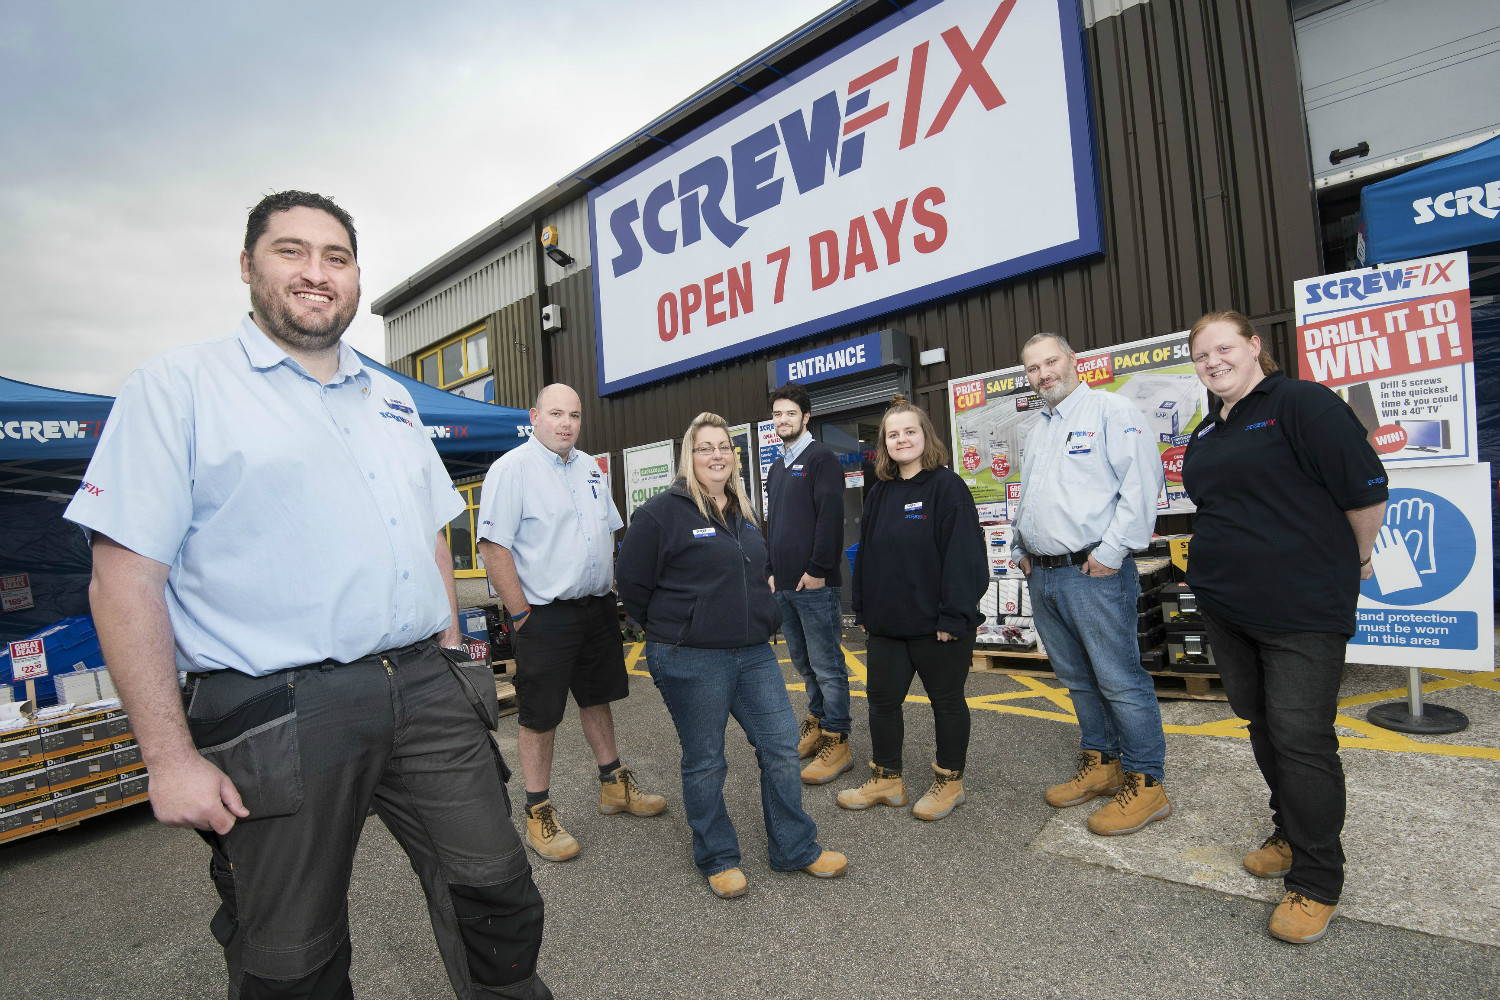 Truro celebrates new Screwfix store opening